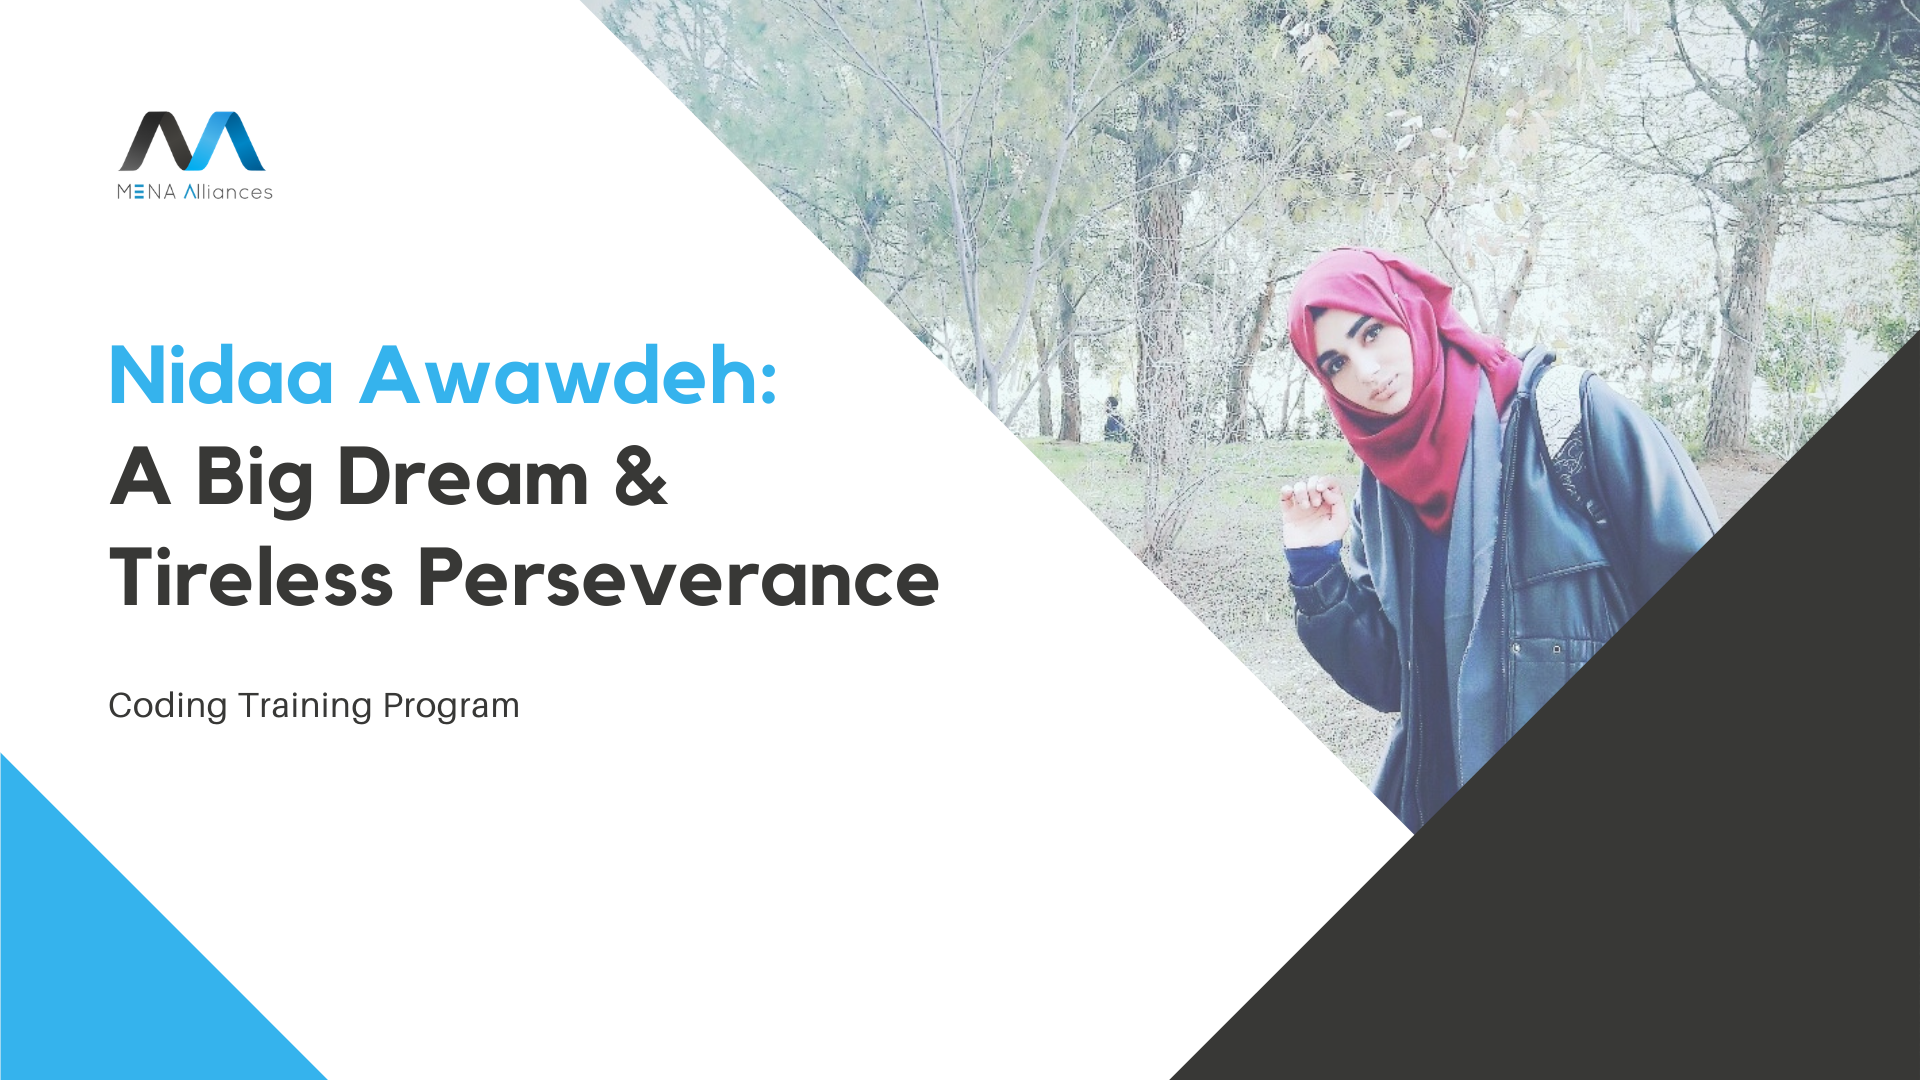 Nidaa Awawdeh: A Big Dream & Tireless Perseverance